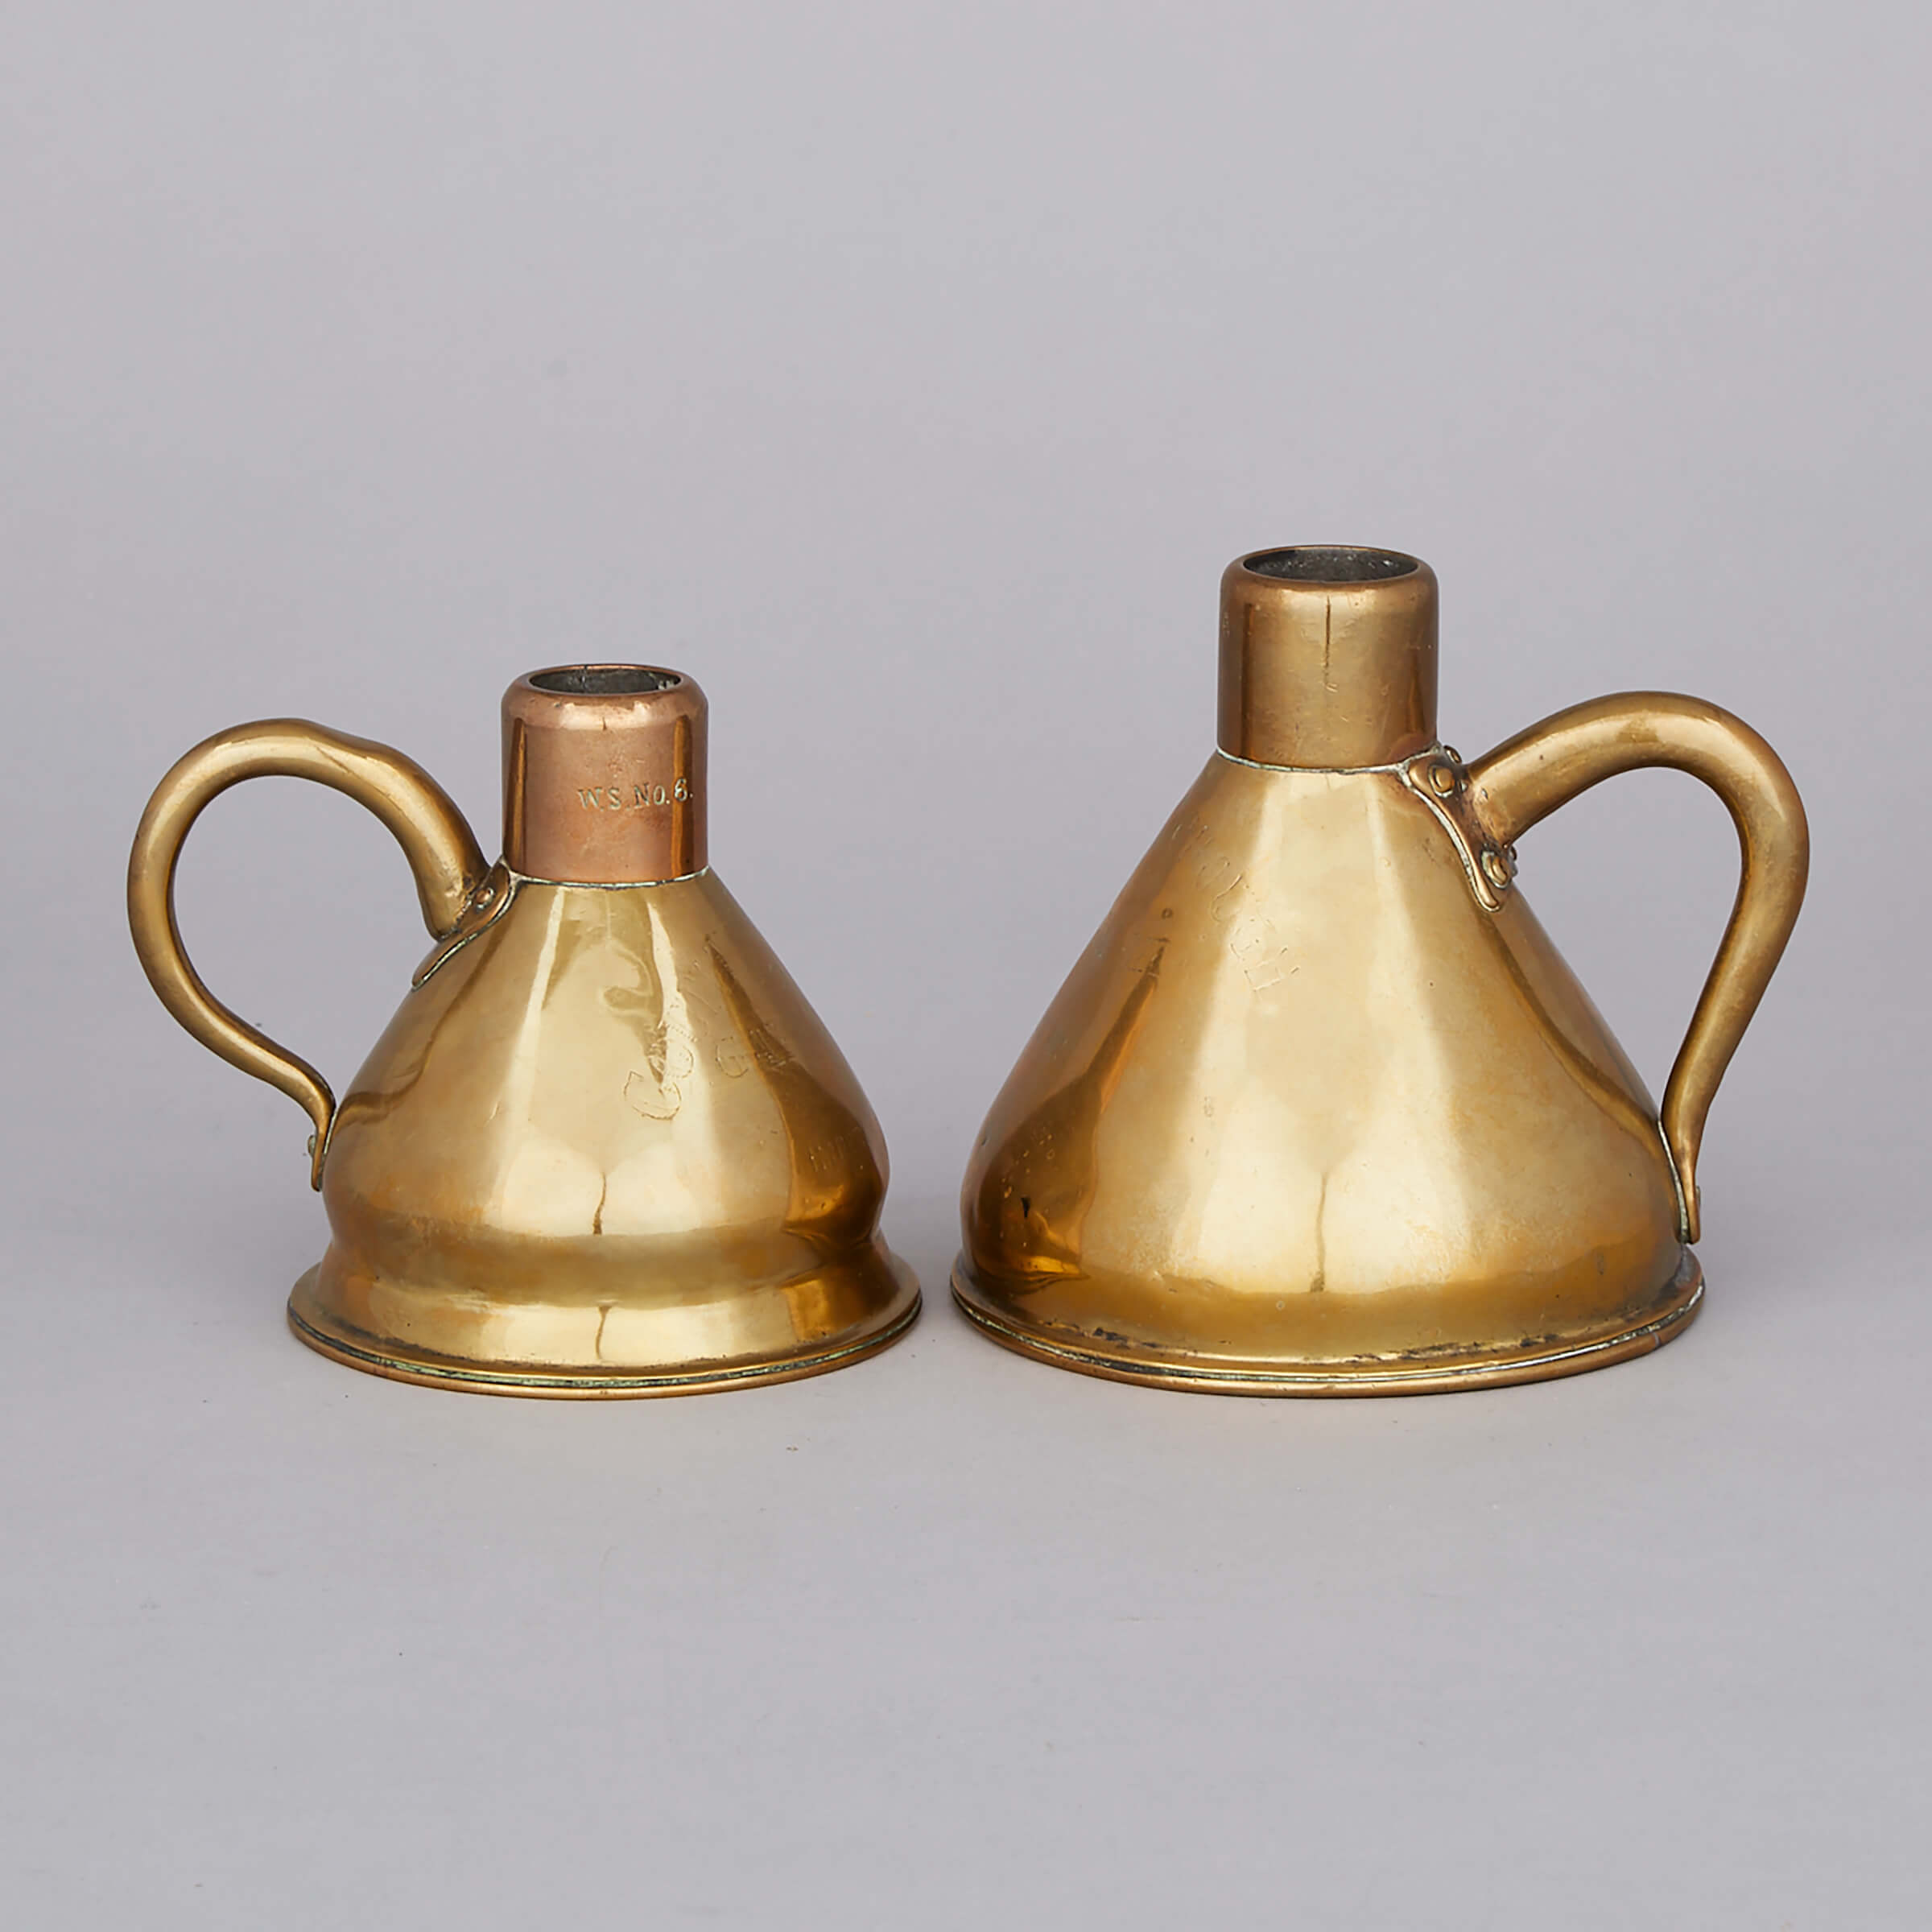 Two English Graduated Brass Conical Measures, John Abbot & Co. Ltd., Gateshead, c.1830